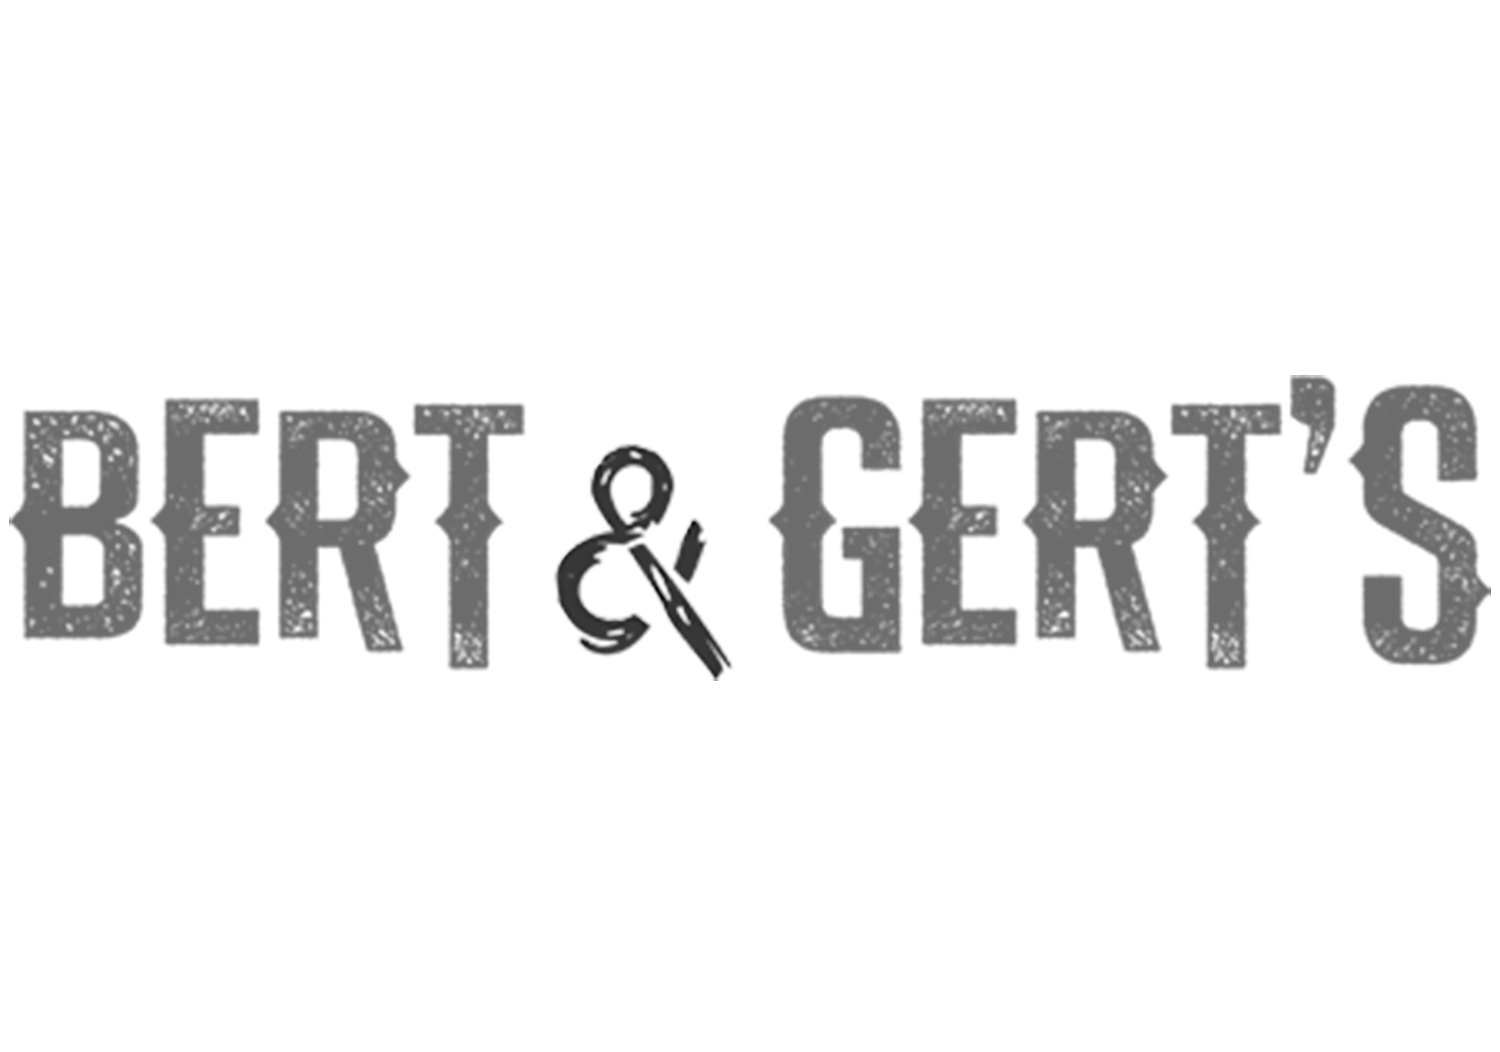 Bert and Gert’s